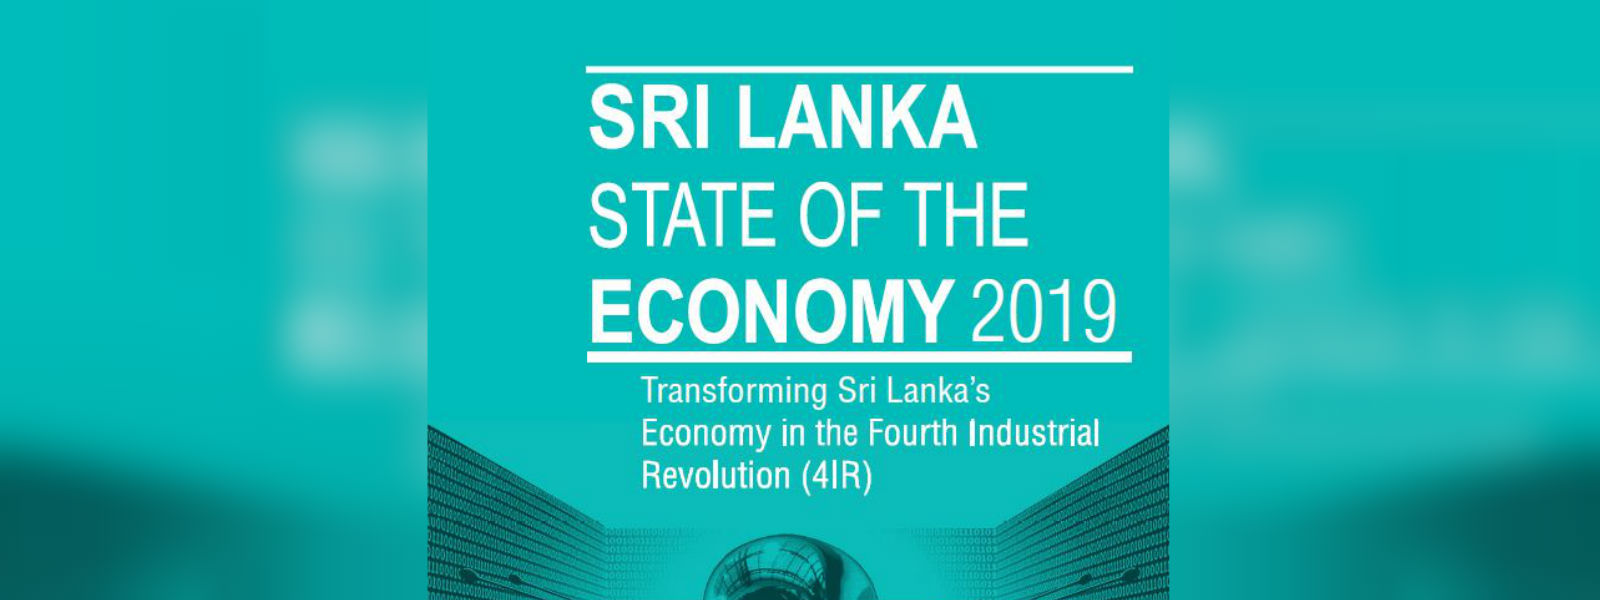 4ir and the future of work in Sri Lanka